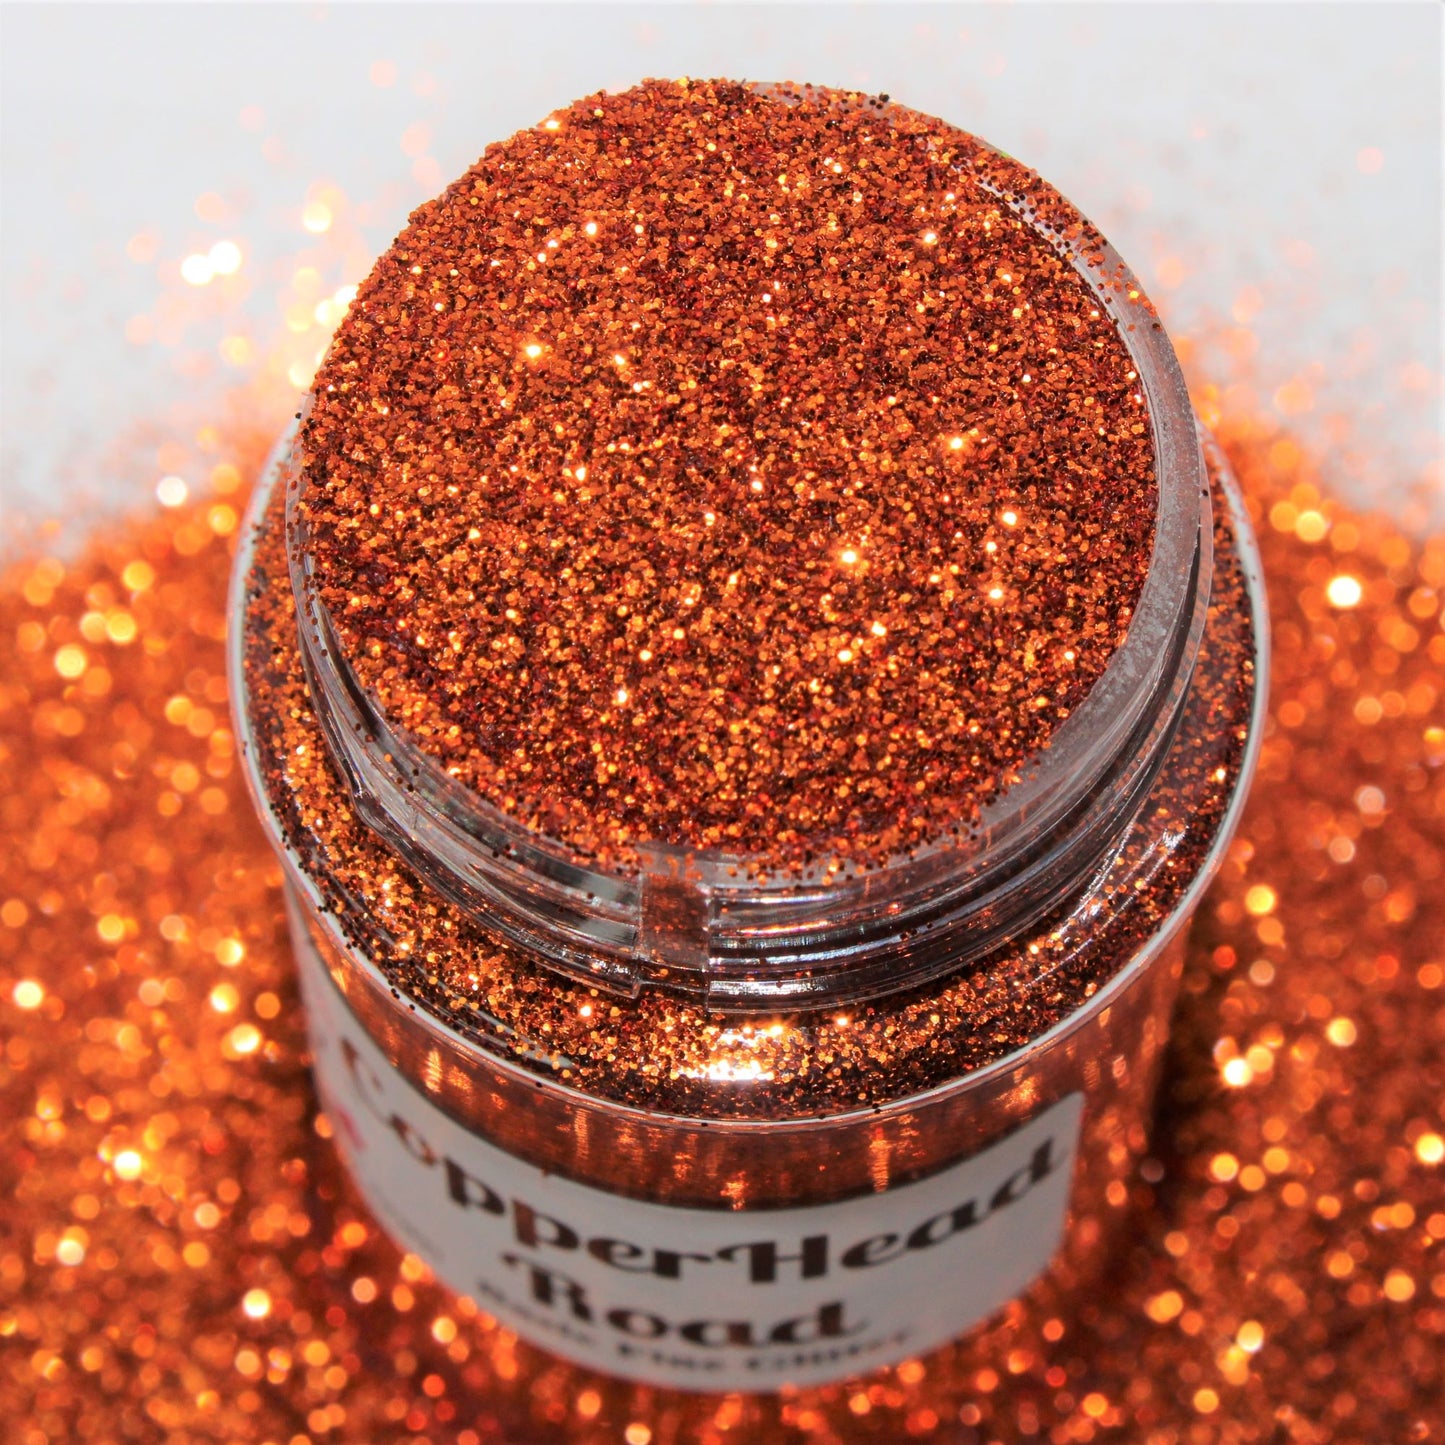 Copperhead RD Basic Fine  glitter